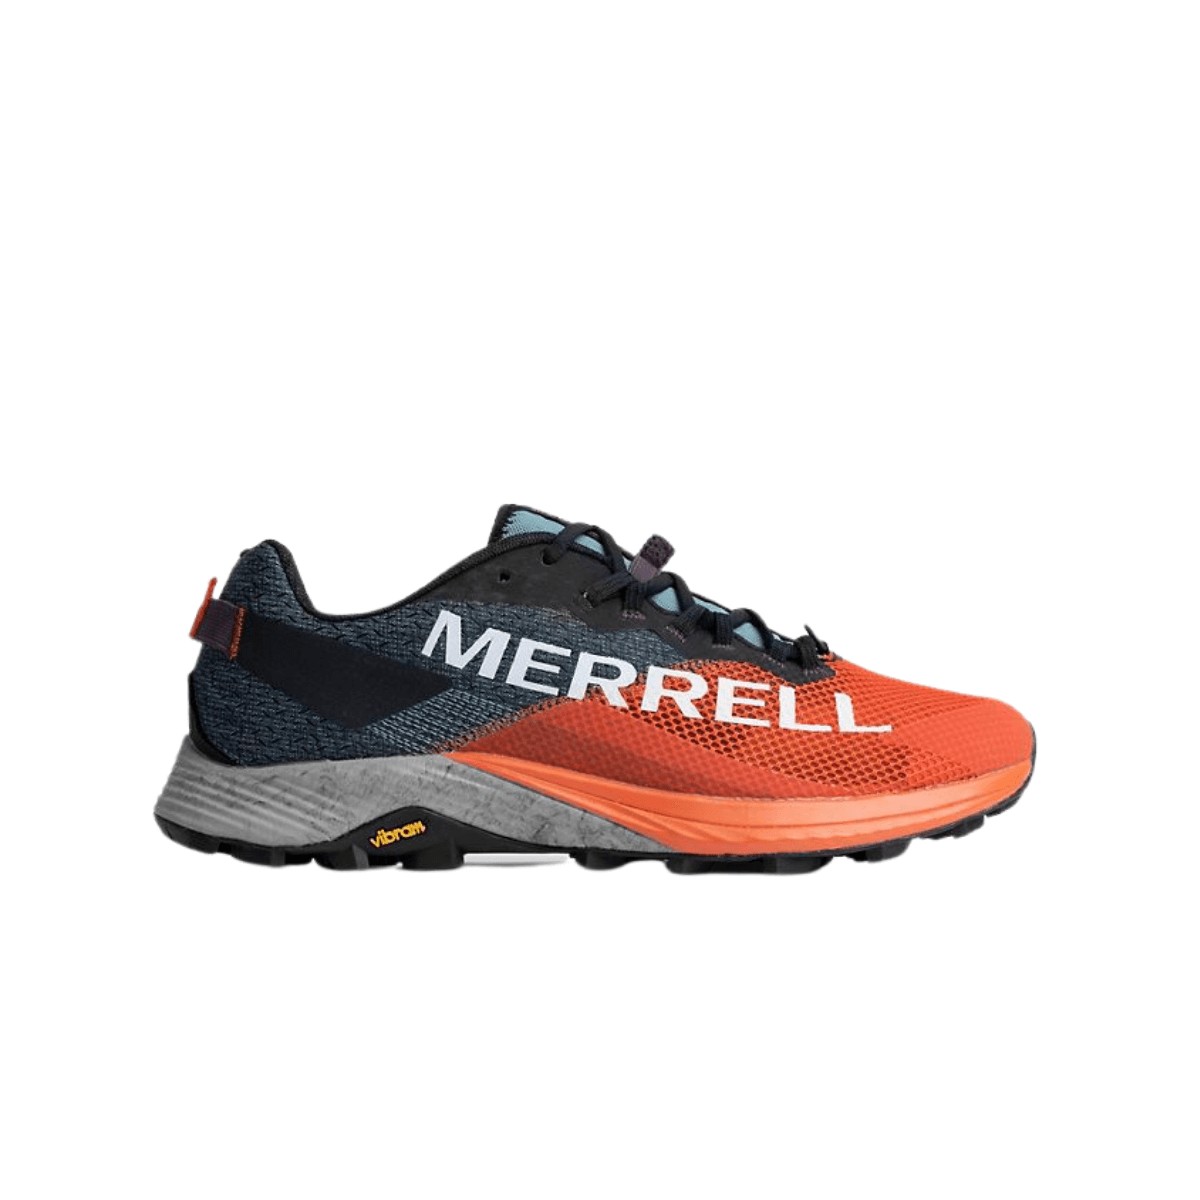 Merrell MTL Long Sky 2 Shoes Black Orange AW22, Size 42 - EUR